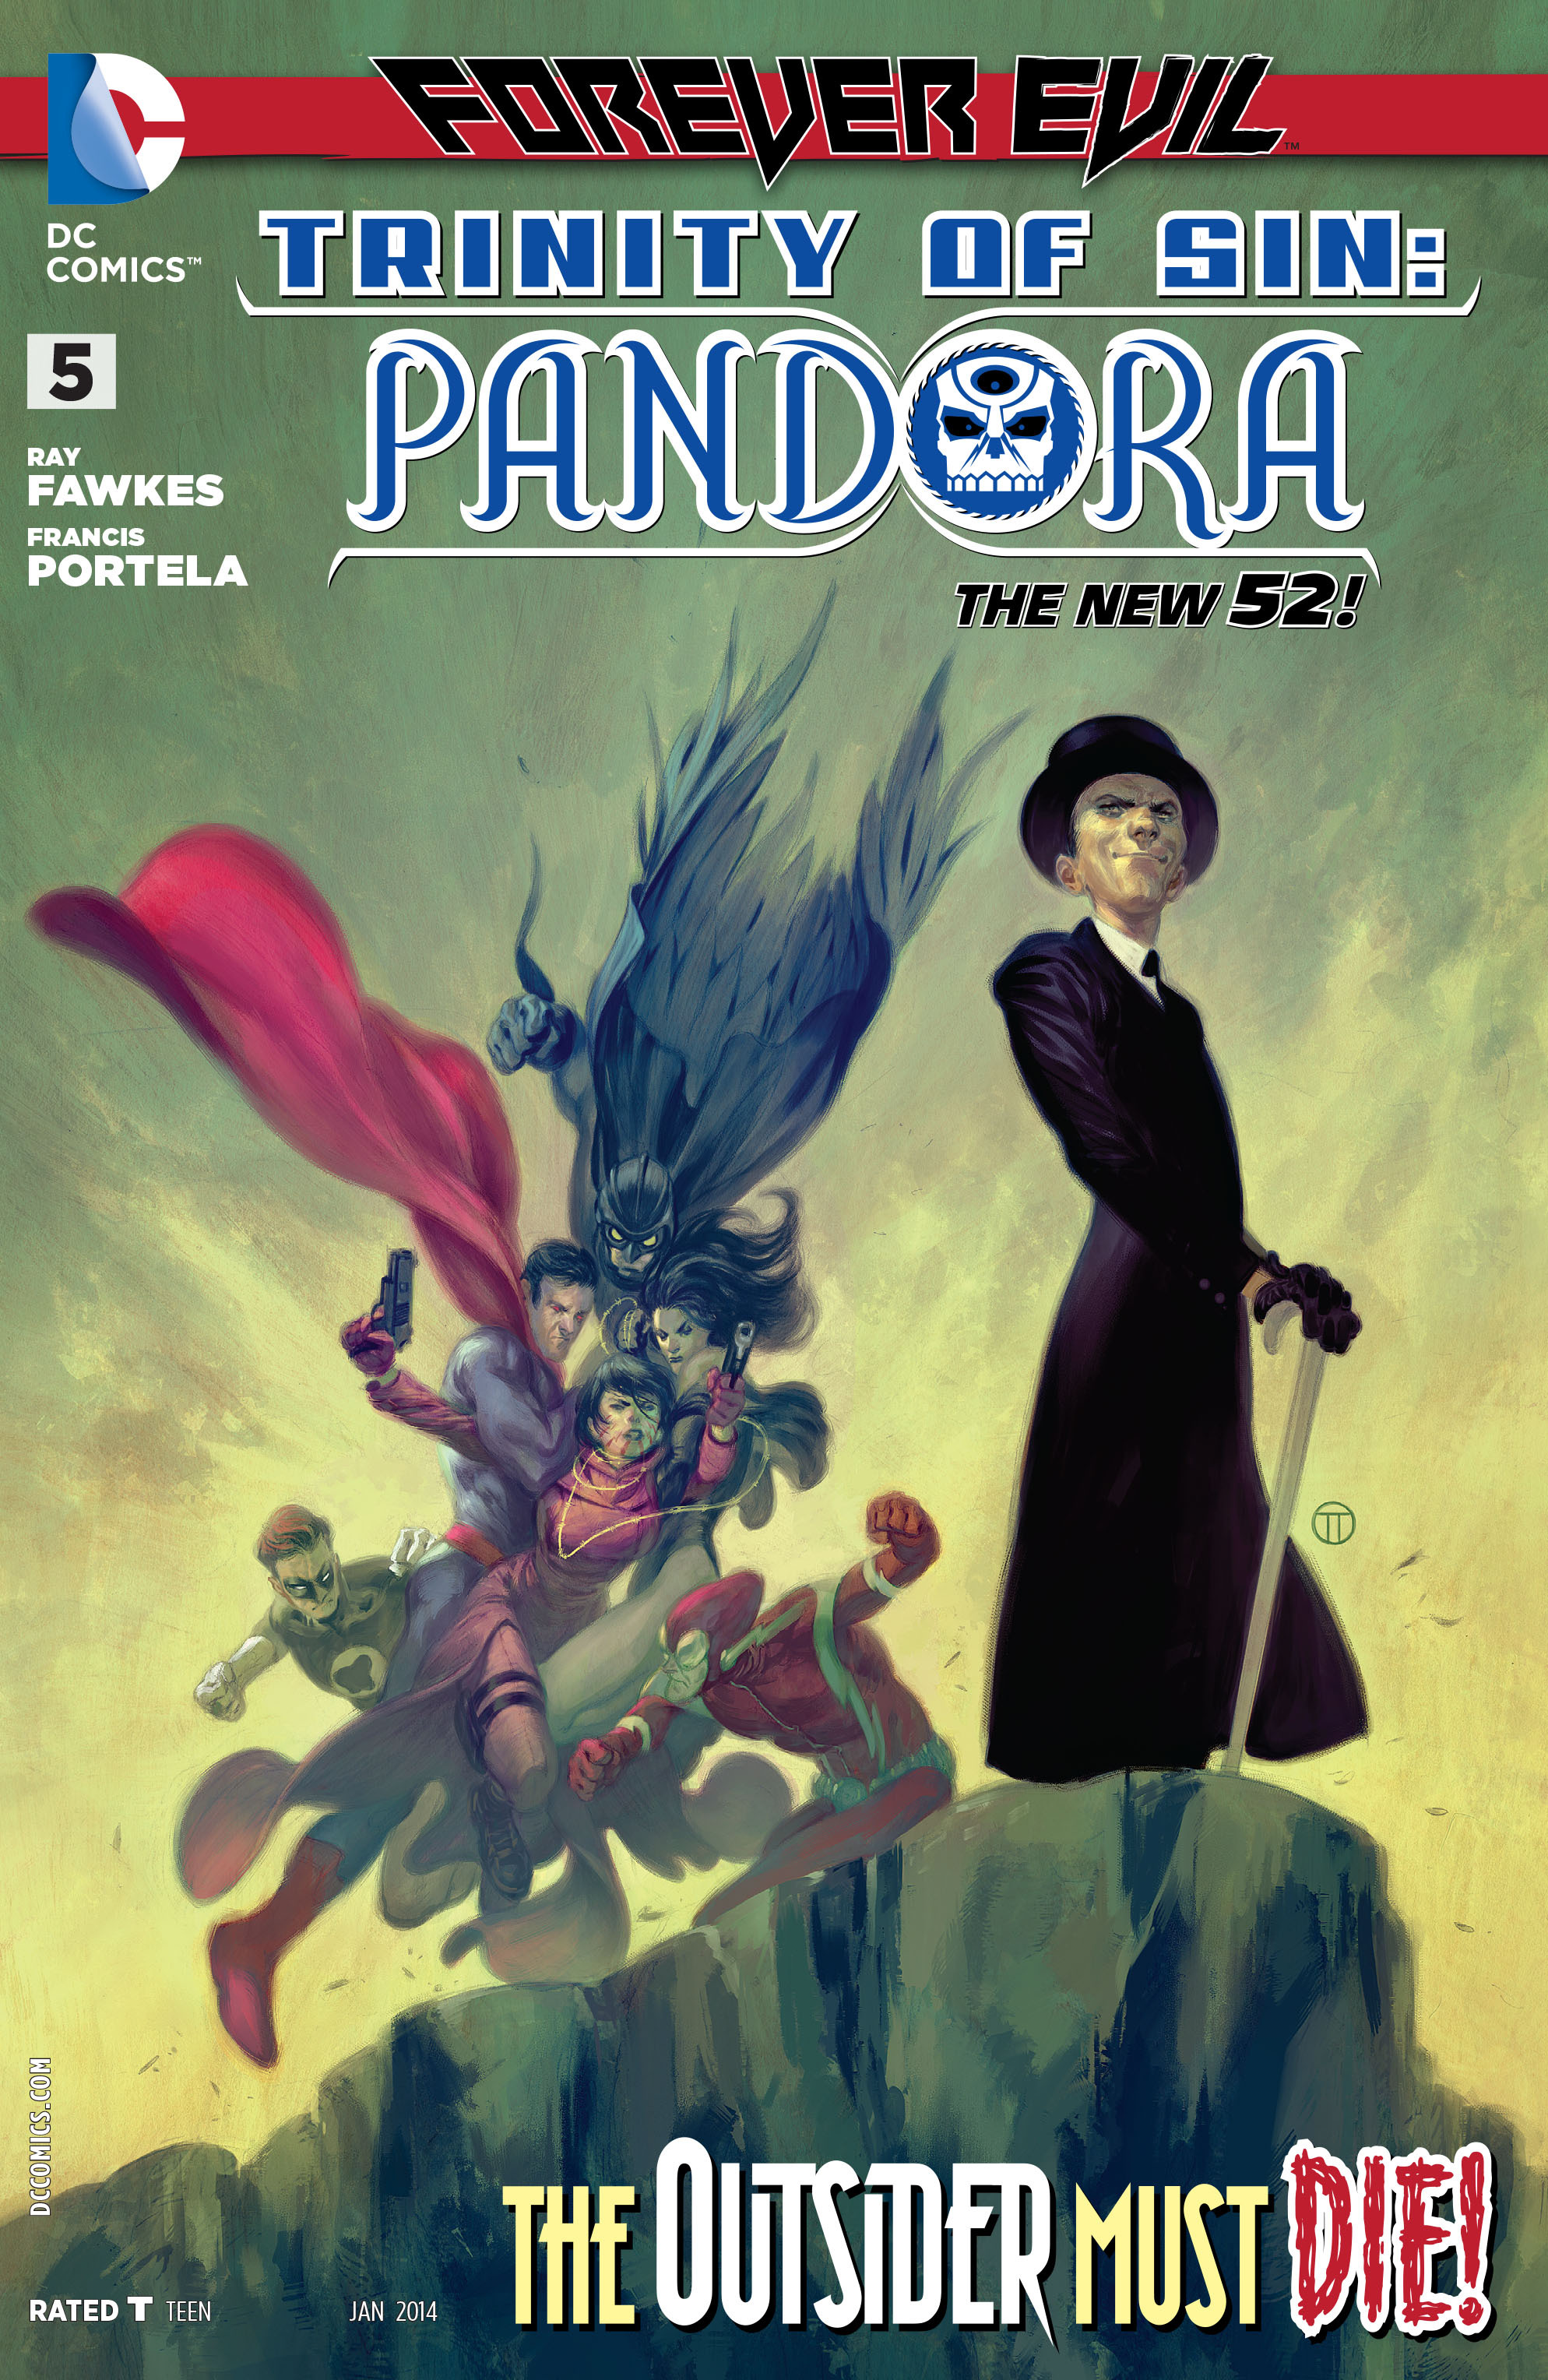 Read online Trinity of Sin: Pandora comic -  Issue #5 - 1